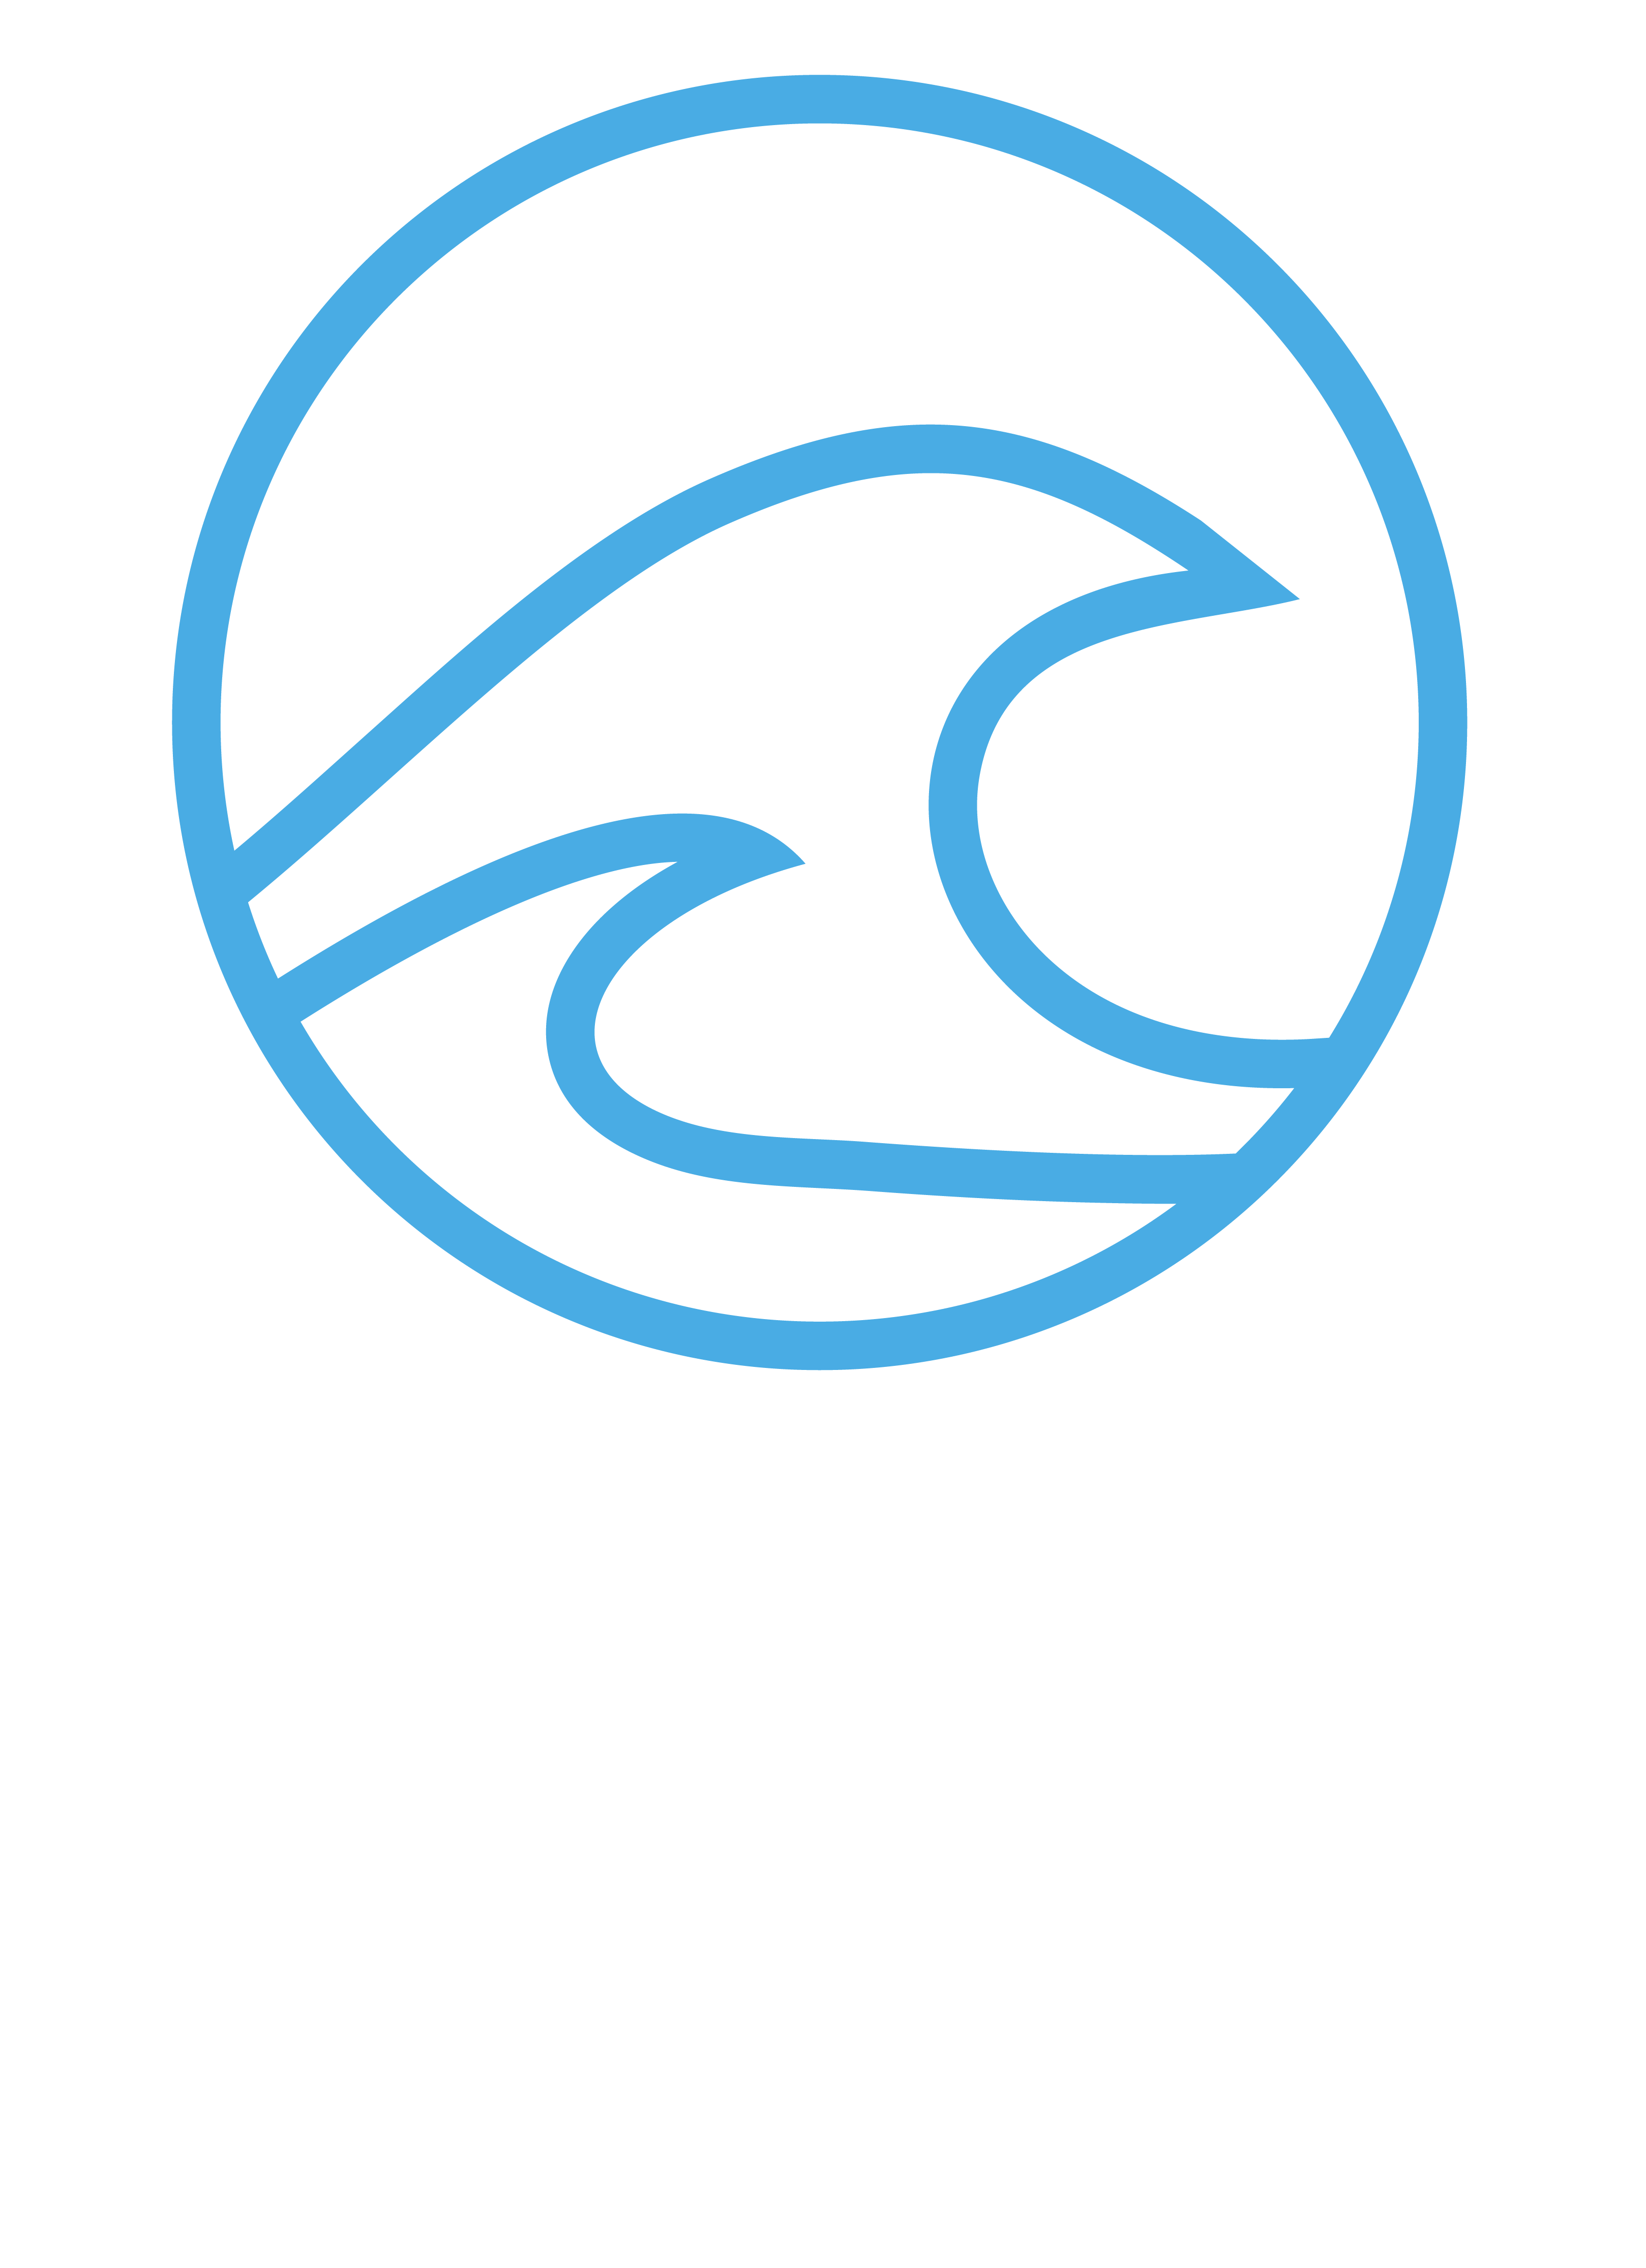 Wave Plumbing logo